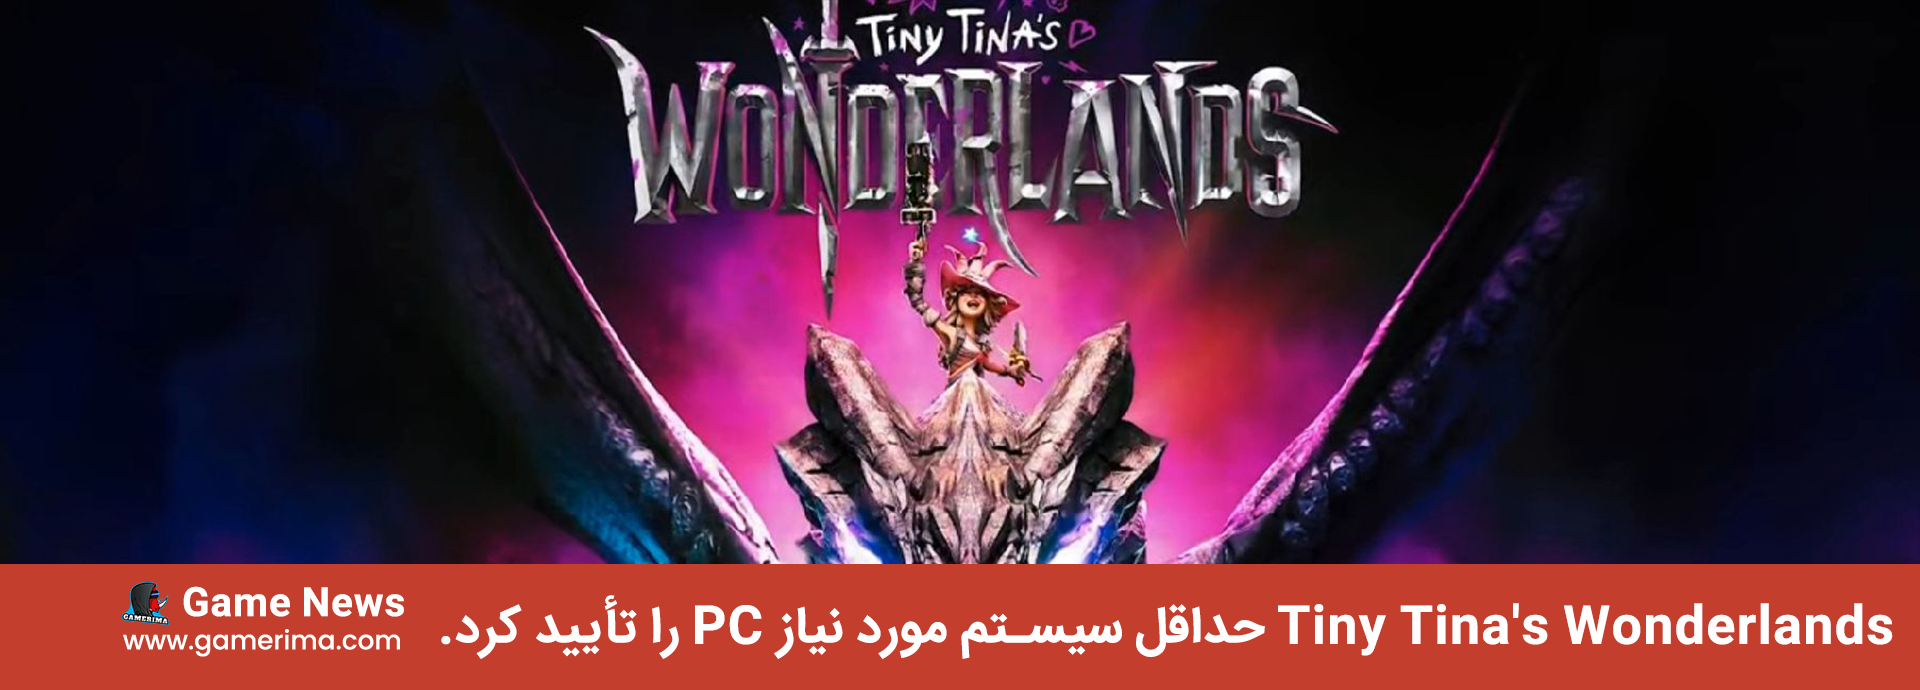 Tiny Tina's Wonderlands حداقل سیستم مورد نیاز PC را تأیید کرد.